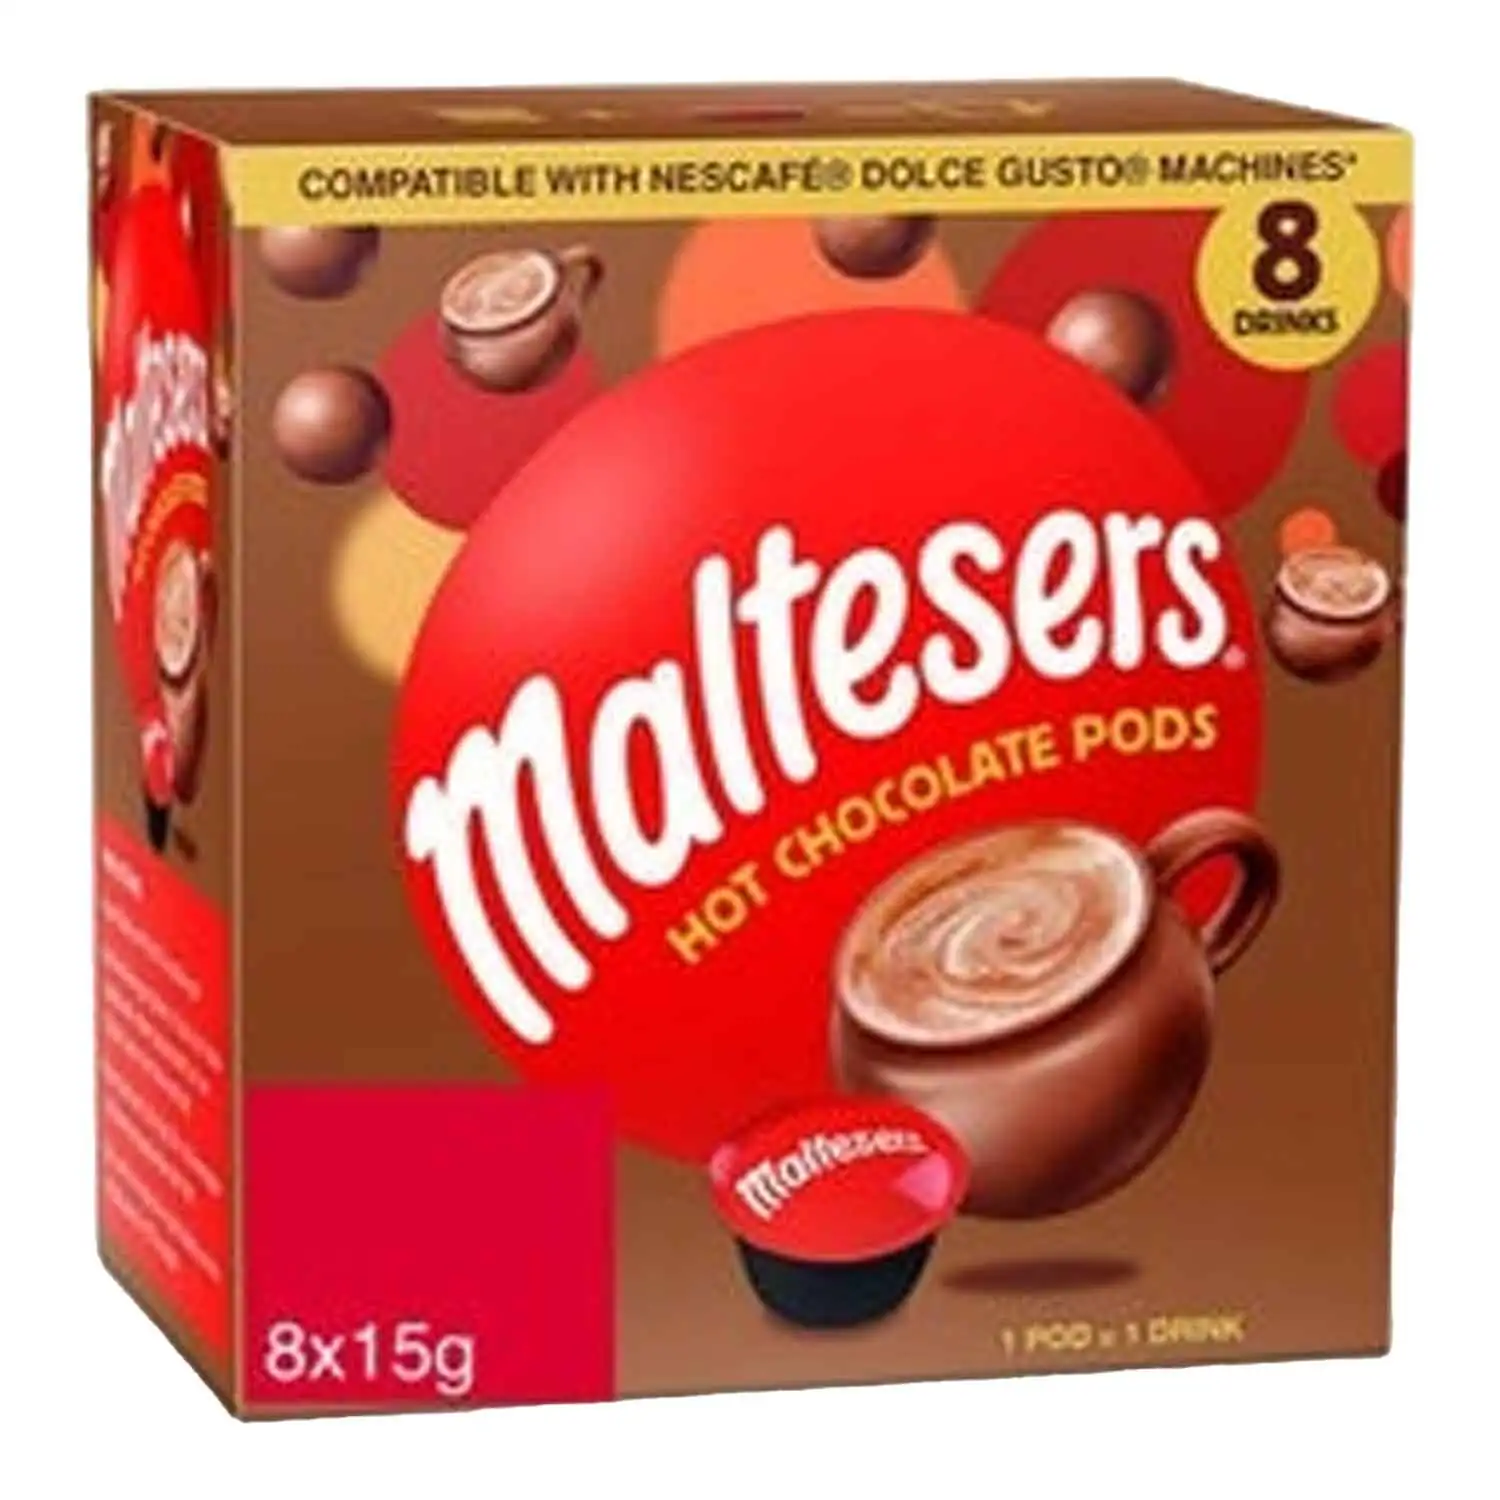 Maltesers hot chocolate pods 8x15g